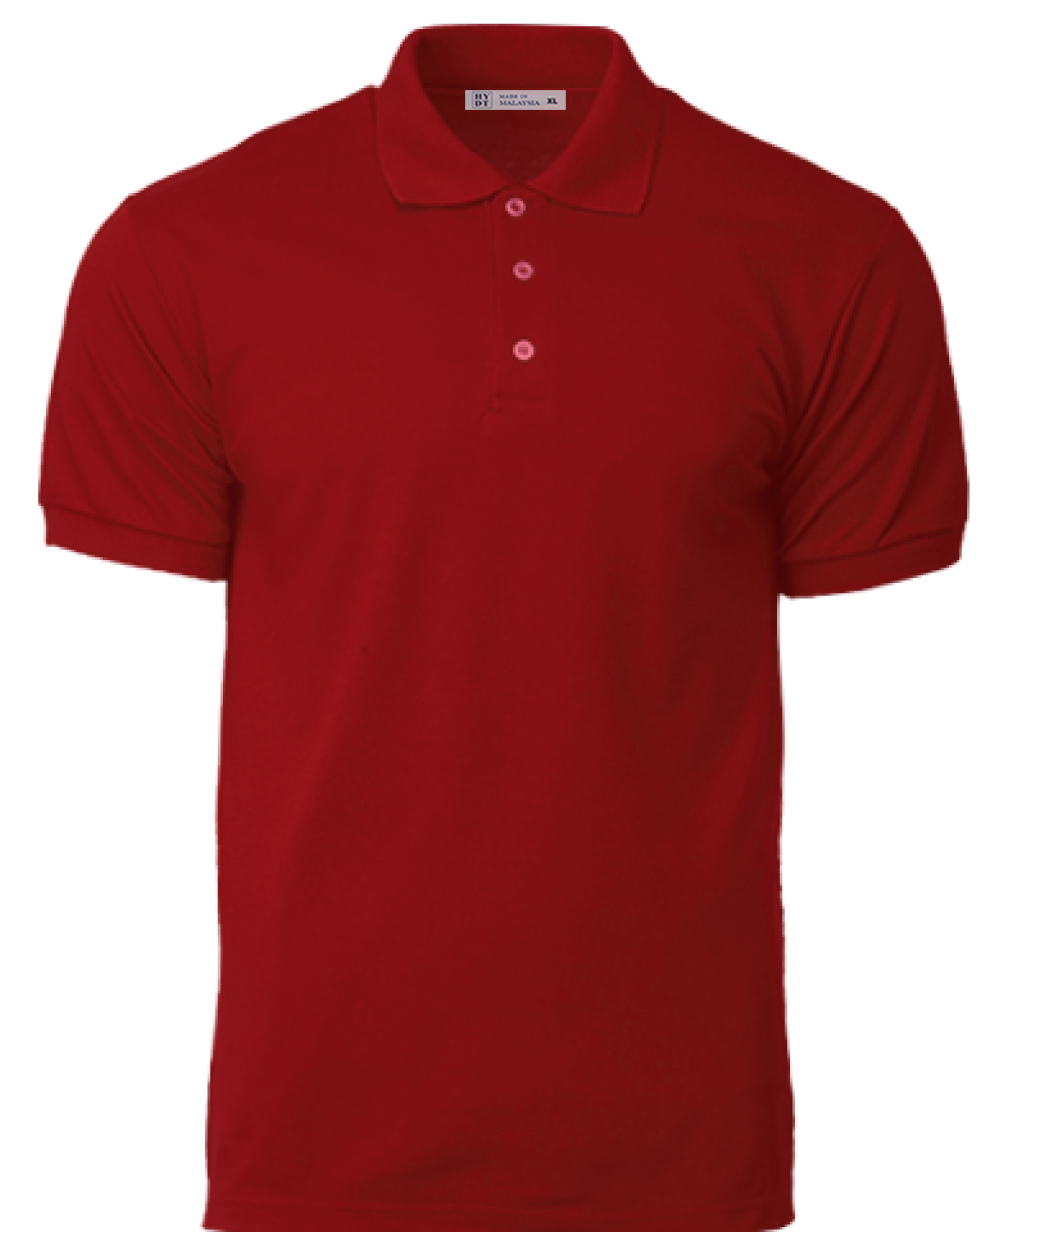 GILDAN x HYDT Unisex Men Polo Shirt Fit Premium Quality Cotton Polyester Soft-Touch Plain Polo Tee Baju Polo Group B PEACH/RED/ROYAL/LIGHT BLUE/LIGHT GREY